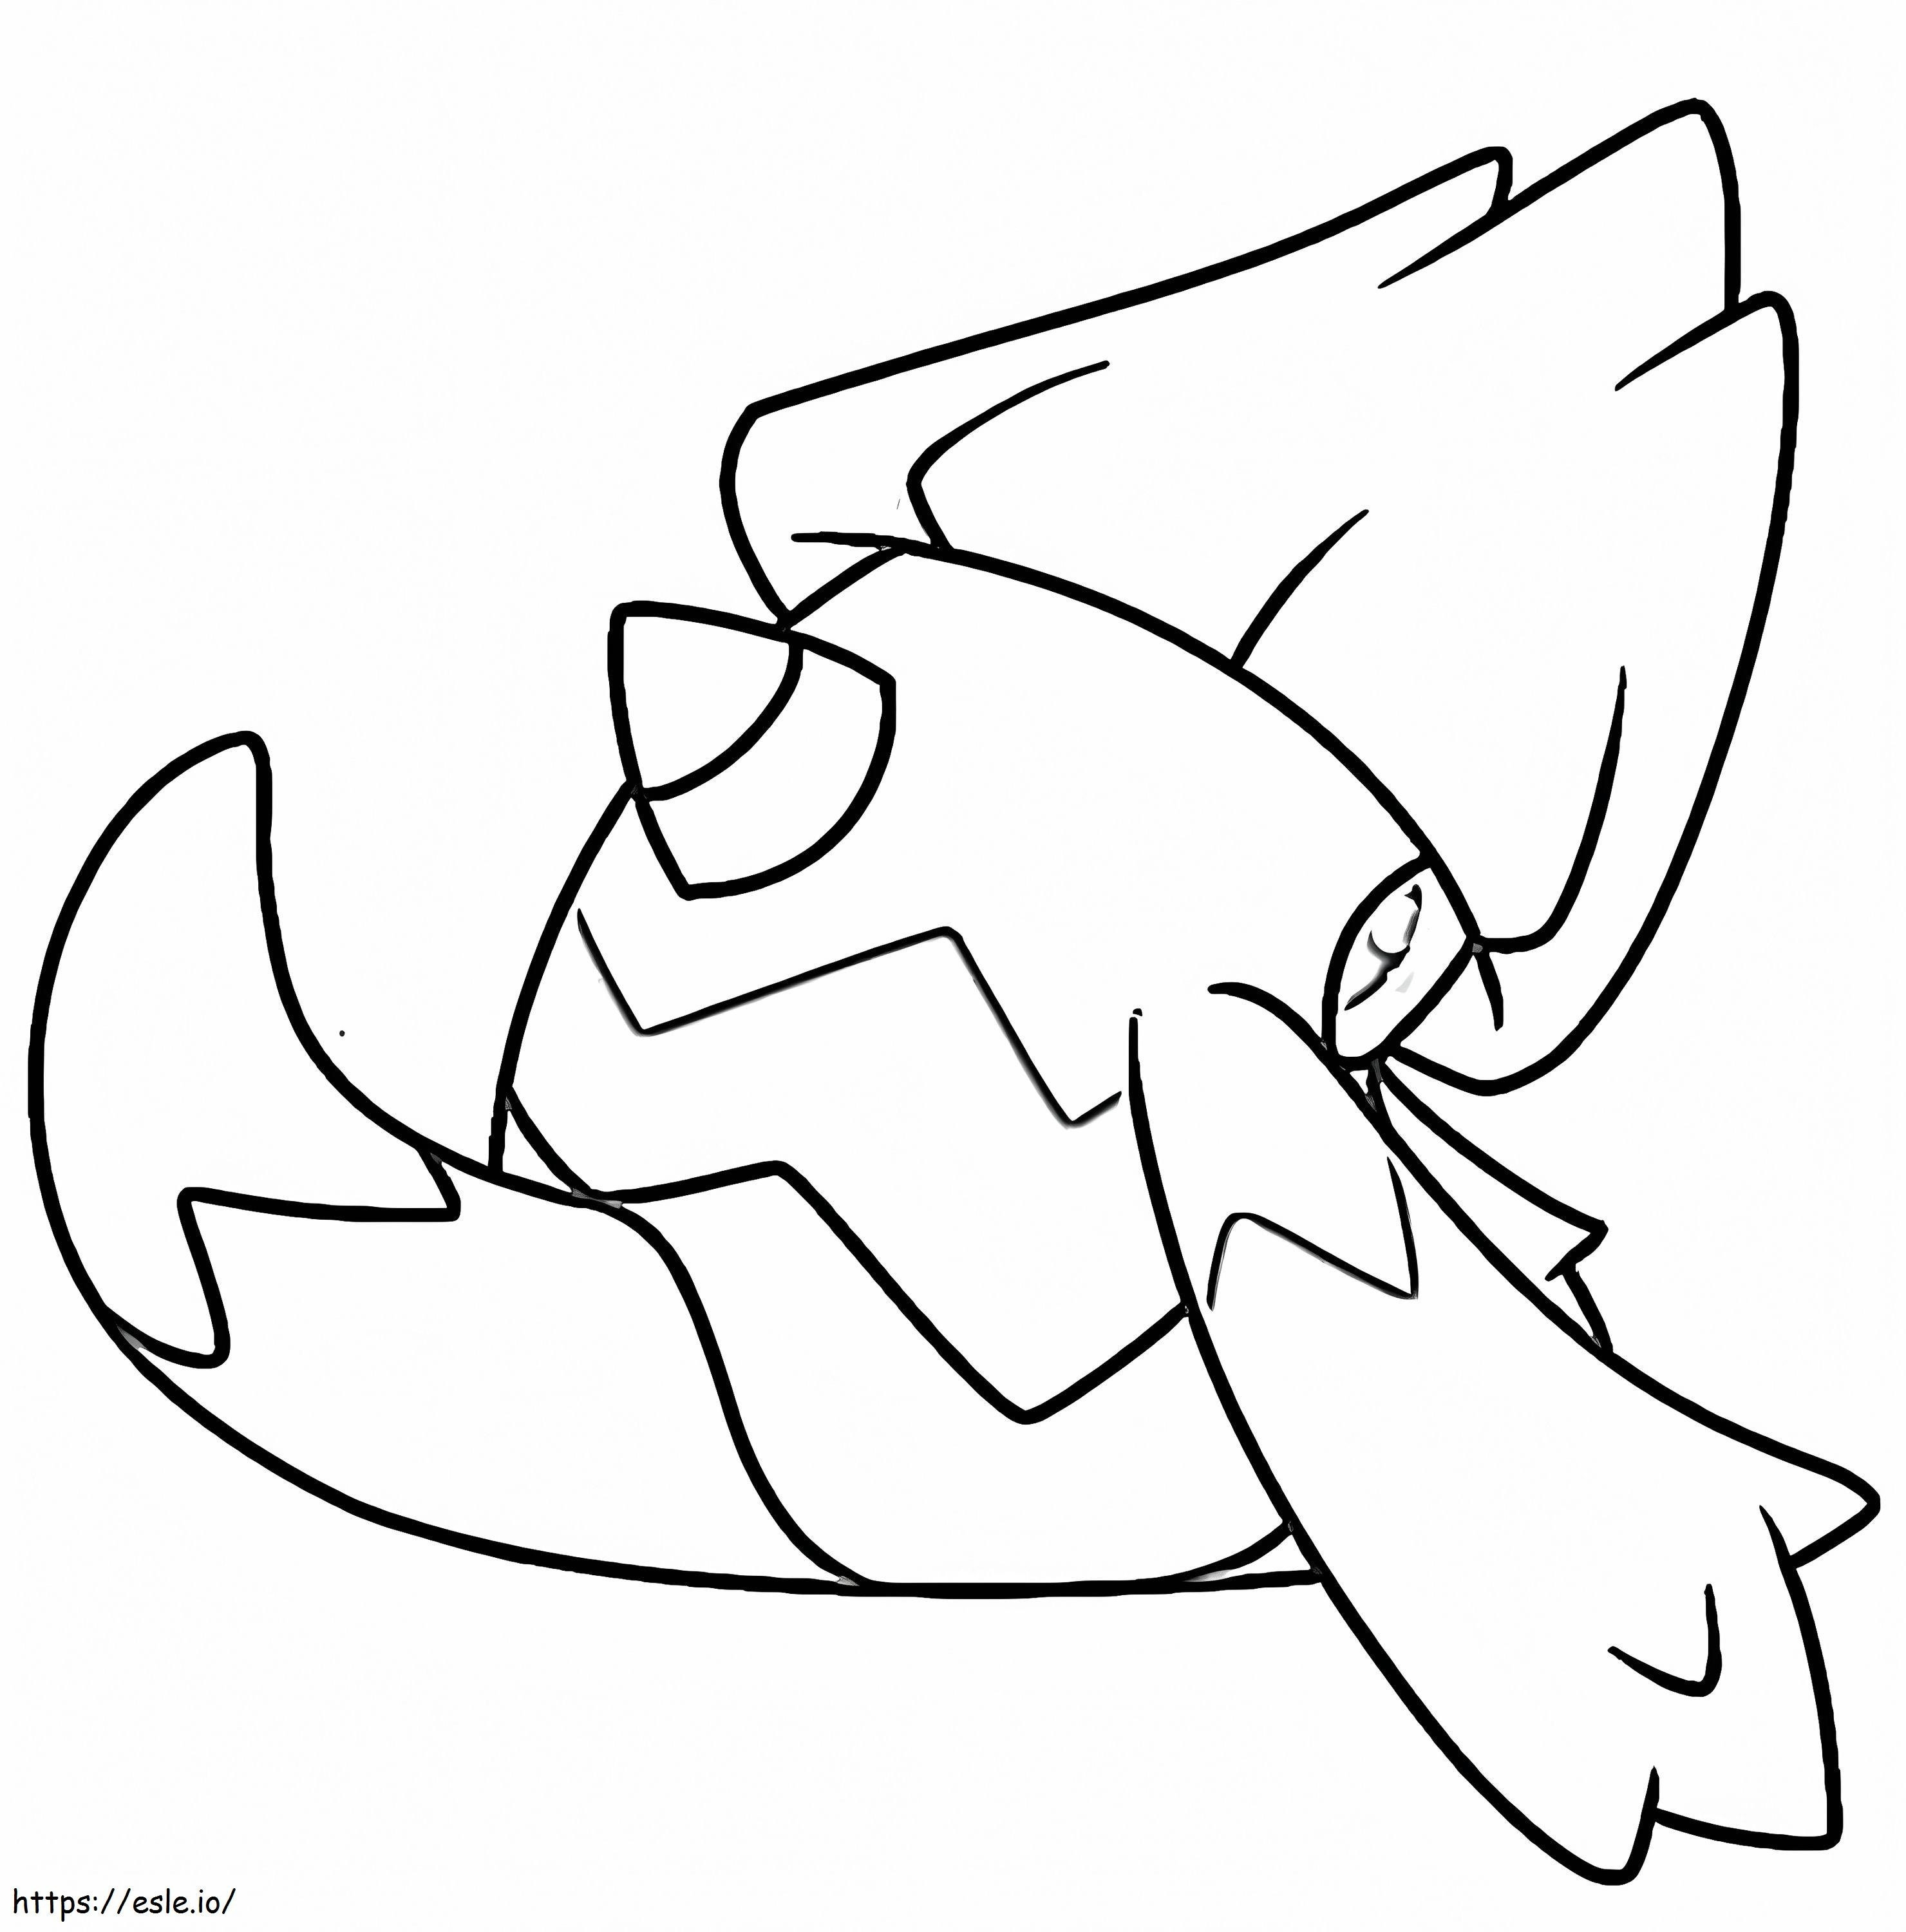 Coloriage Snover Pokemon 2 à imprimer dessin